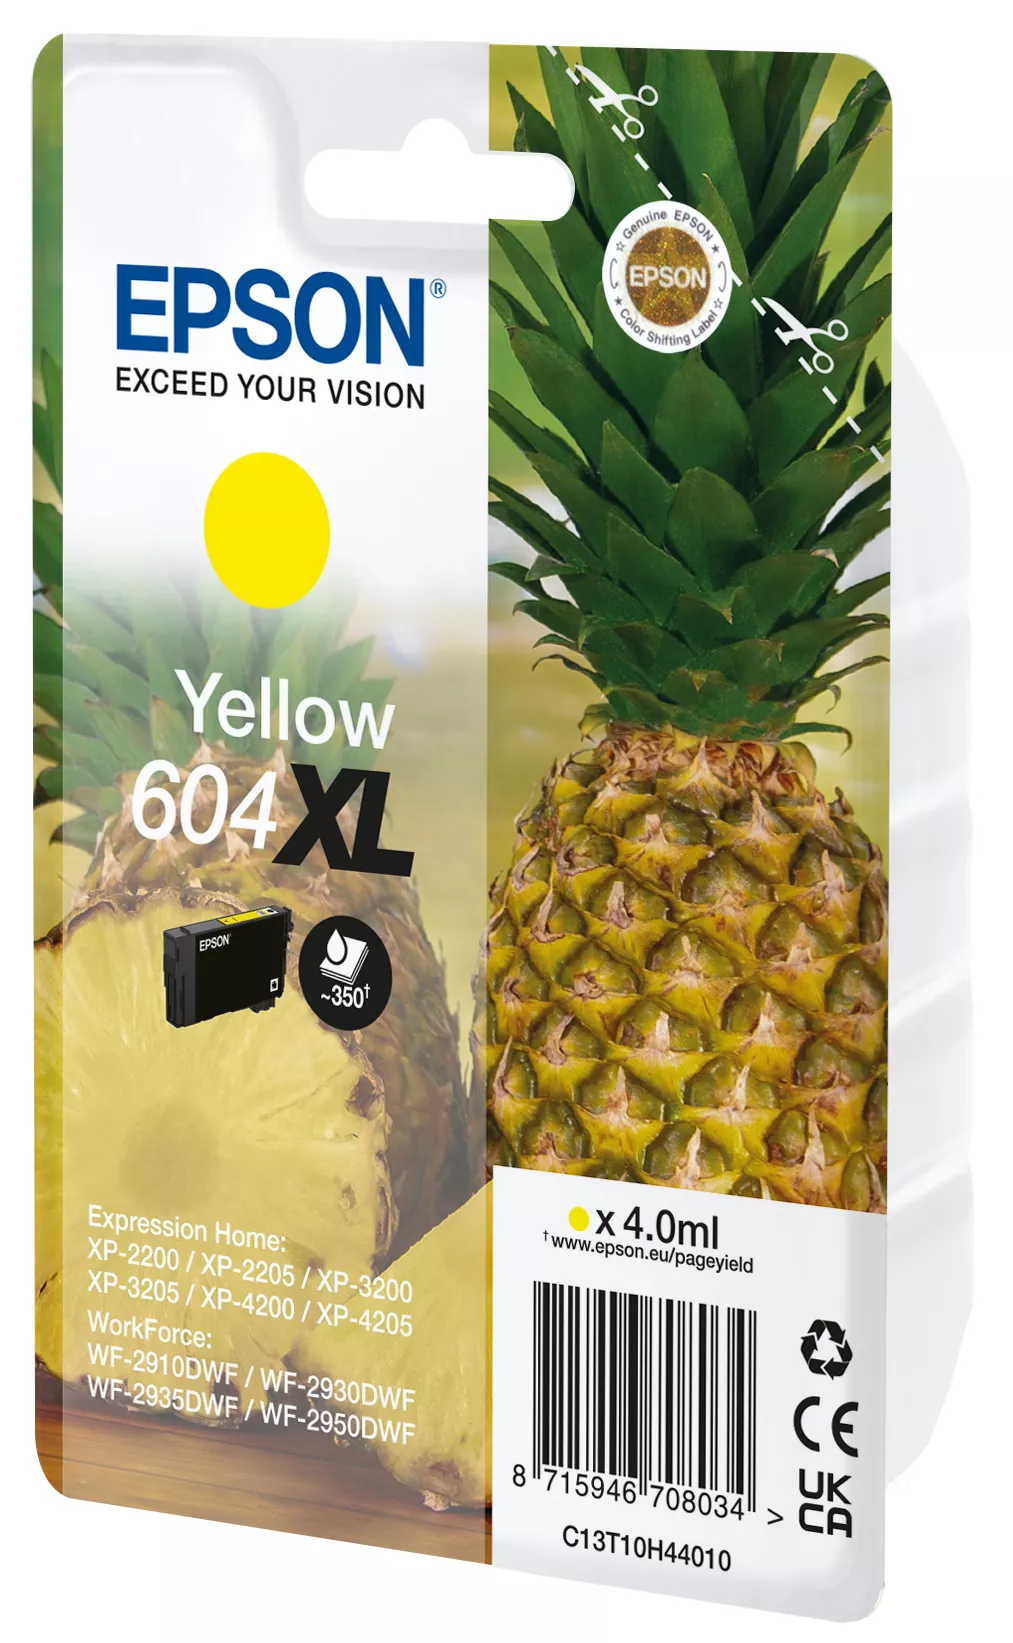 Revendeur officiel EPSON Singlepack Yellow 604XL Ink